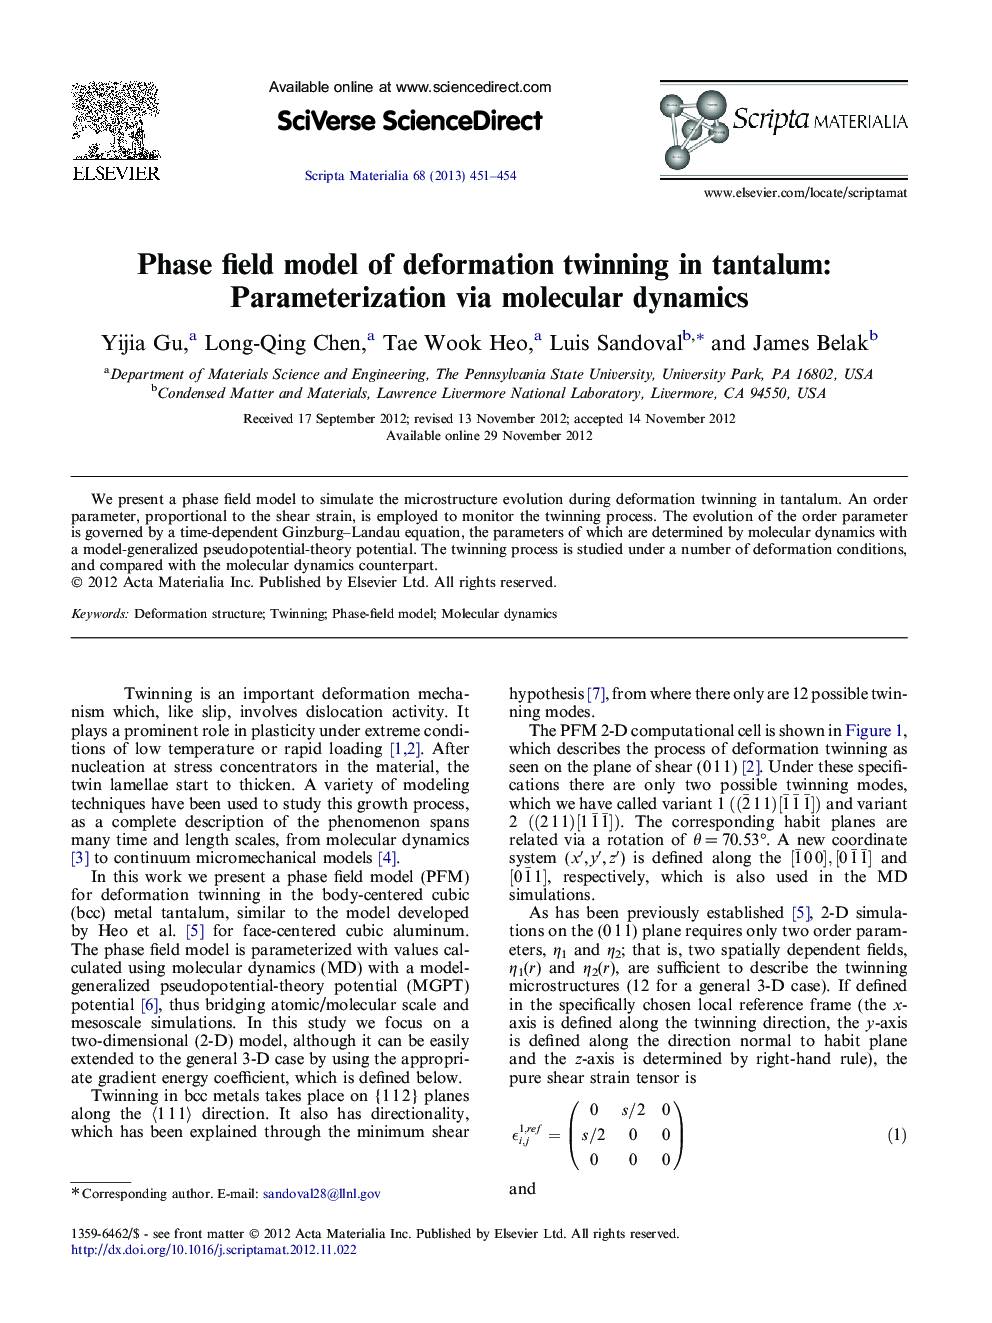 Phase field model of deformation twinning in tantalum: Parameterization via molecular dynamics